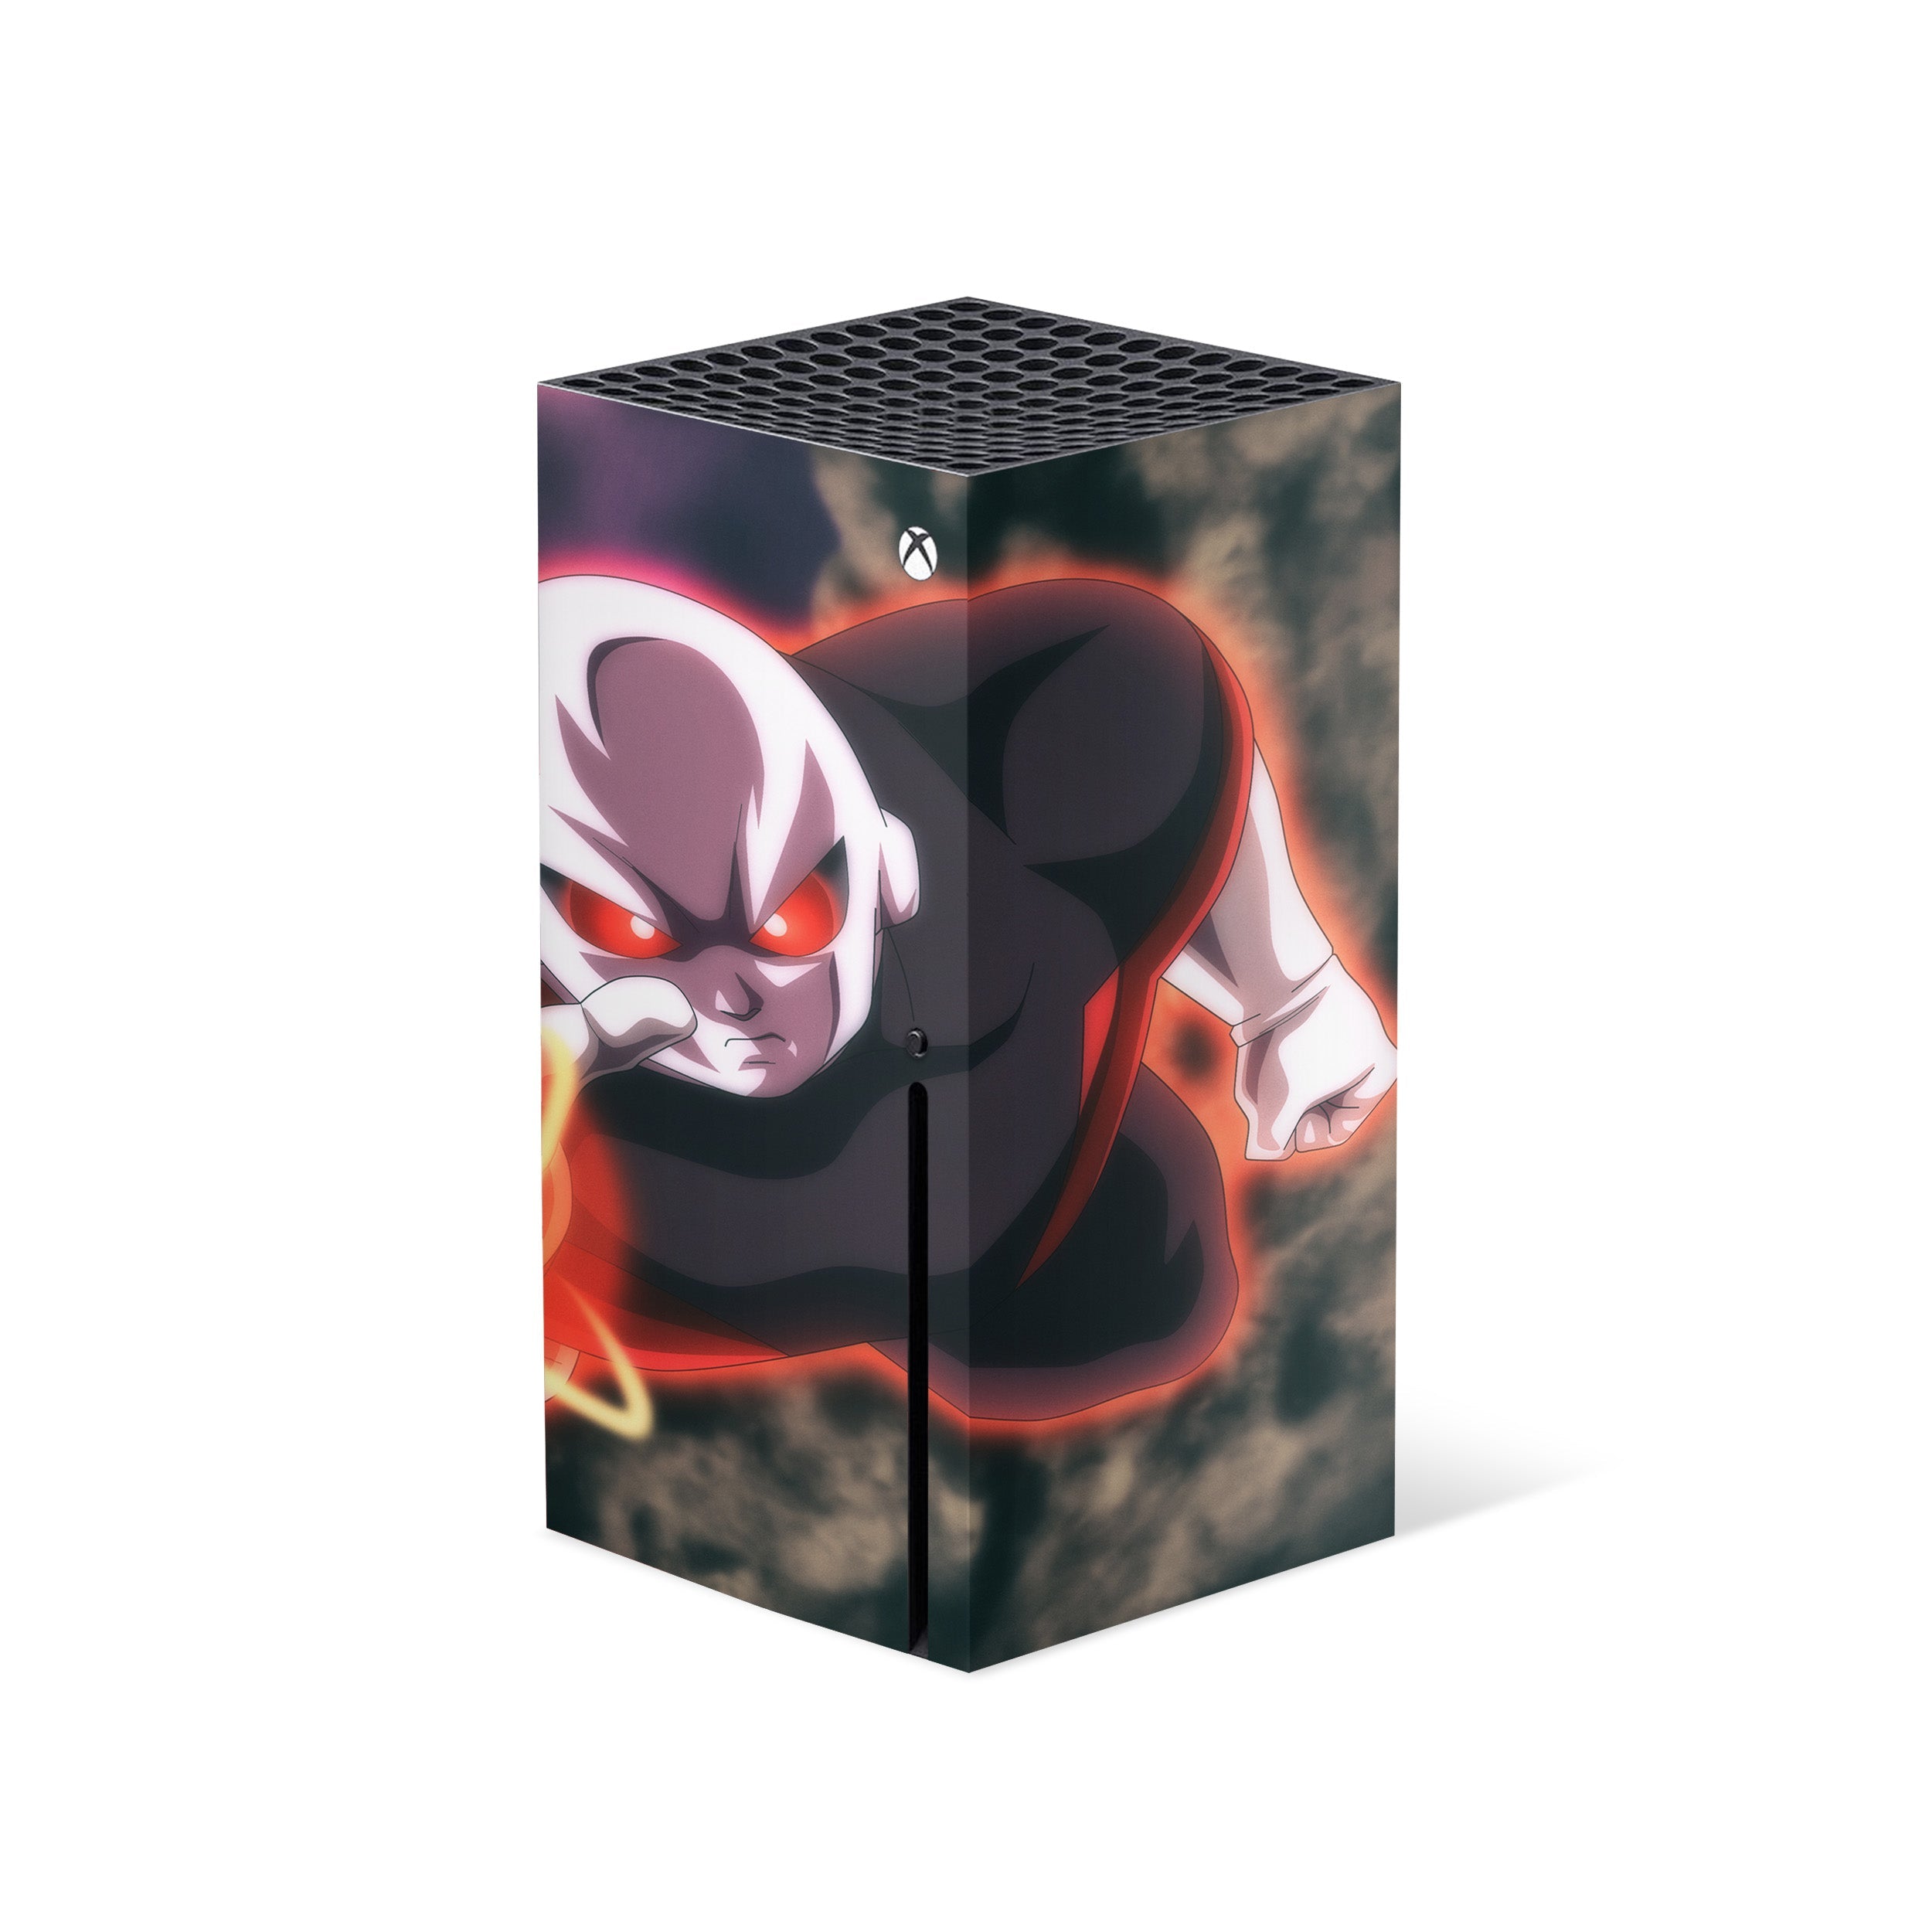 A video game skin featuring a Dragon Ball Super Jiren design for the Xbox Series X.